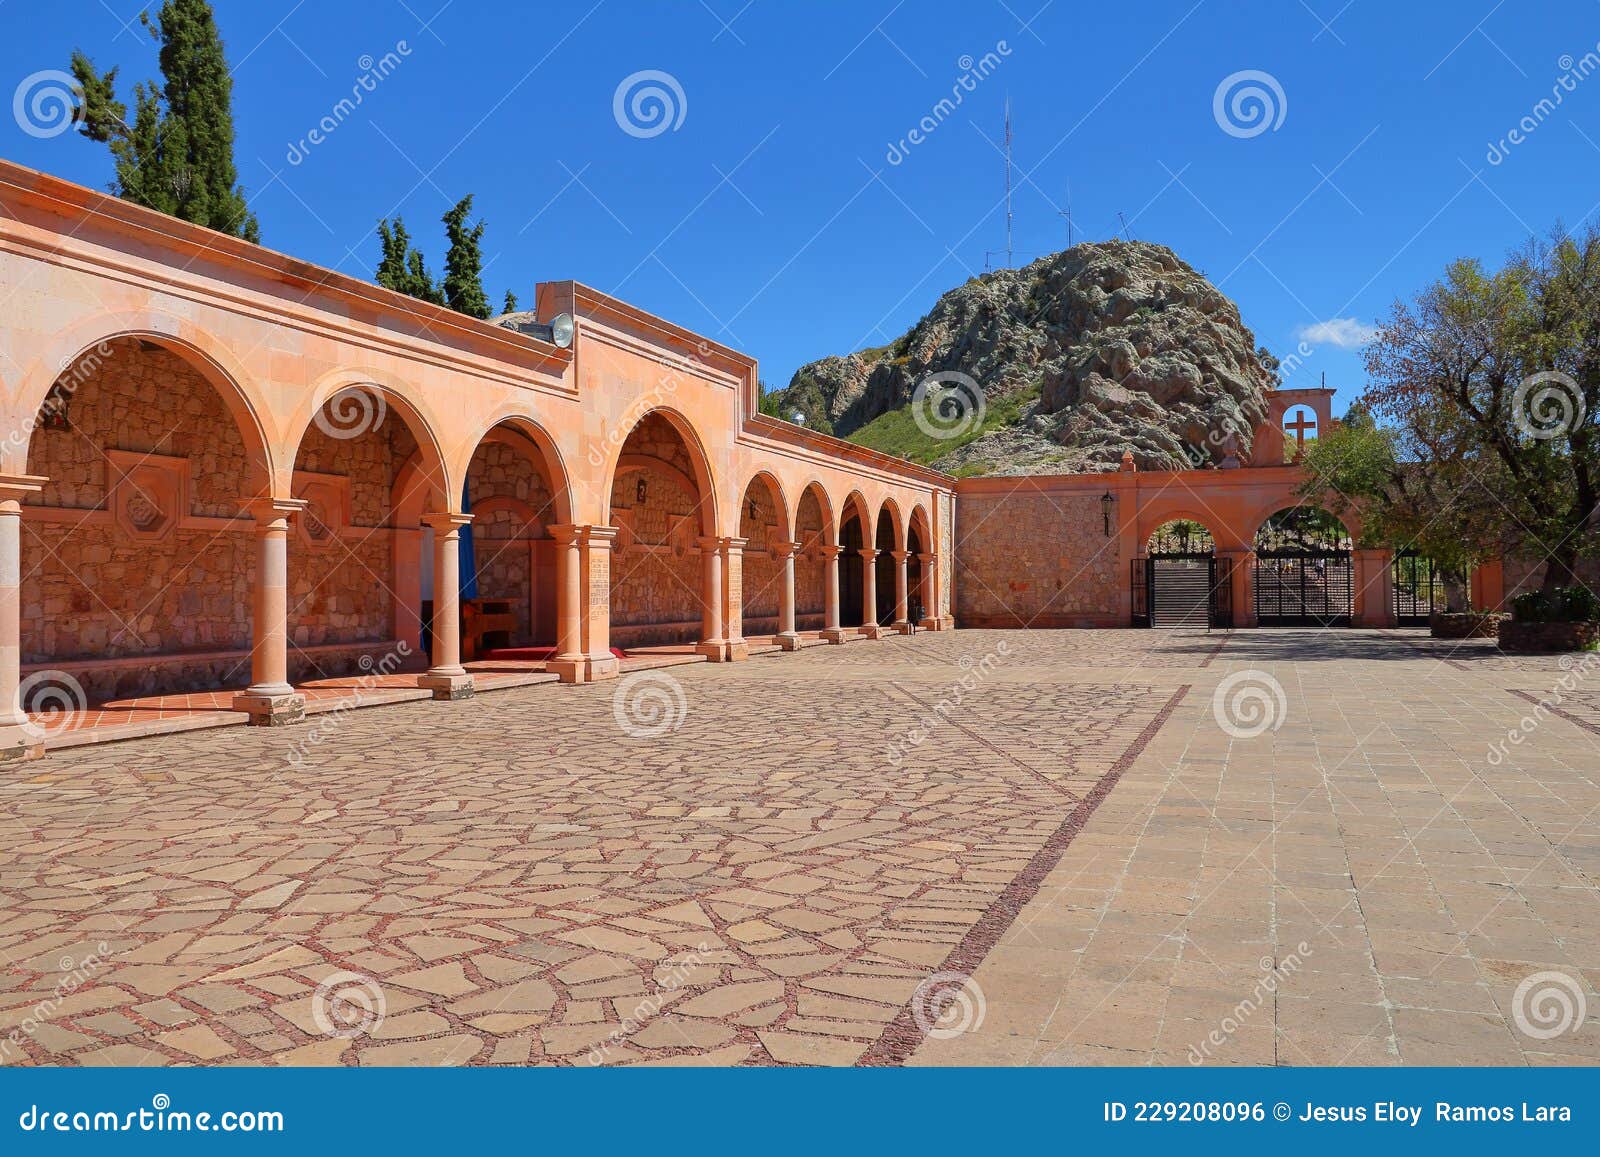 sanctuary of the virgen del patrocinio in zacatecas iv